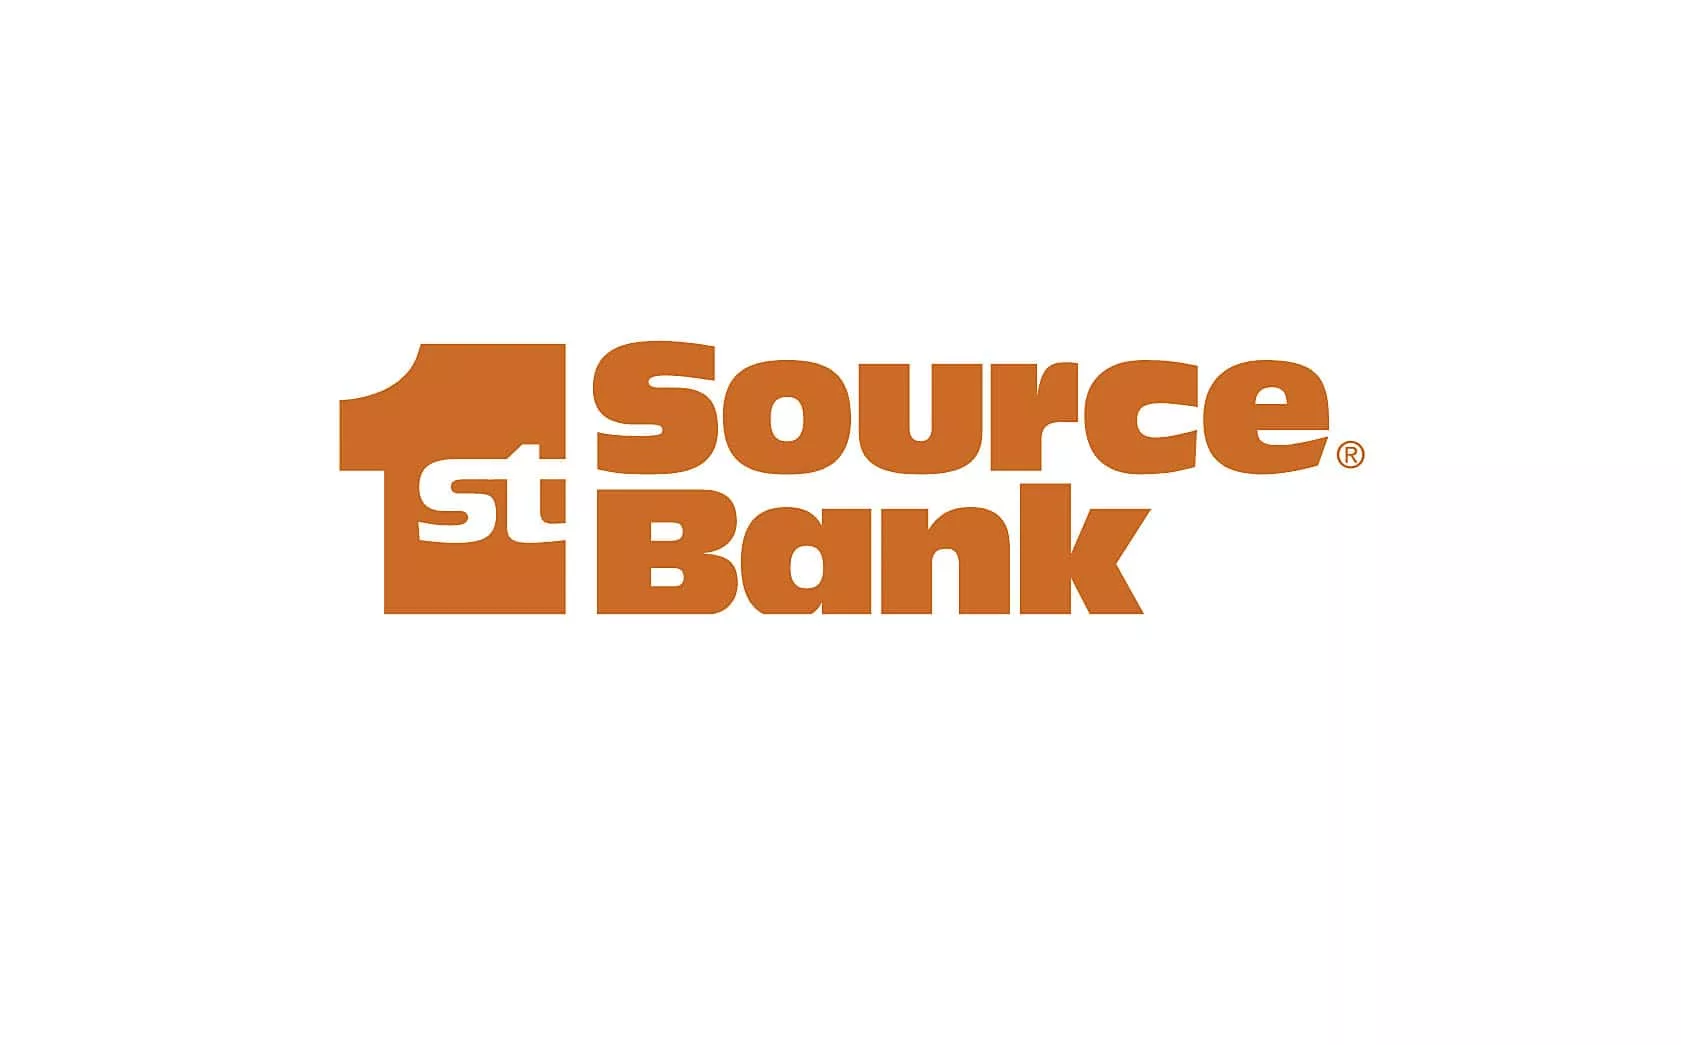 1st Source logo